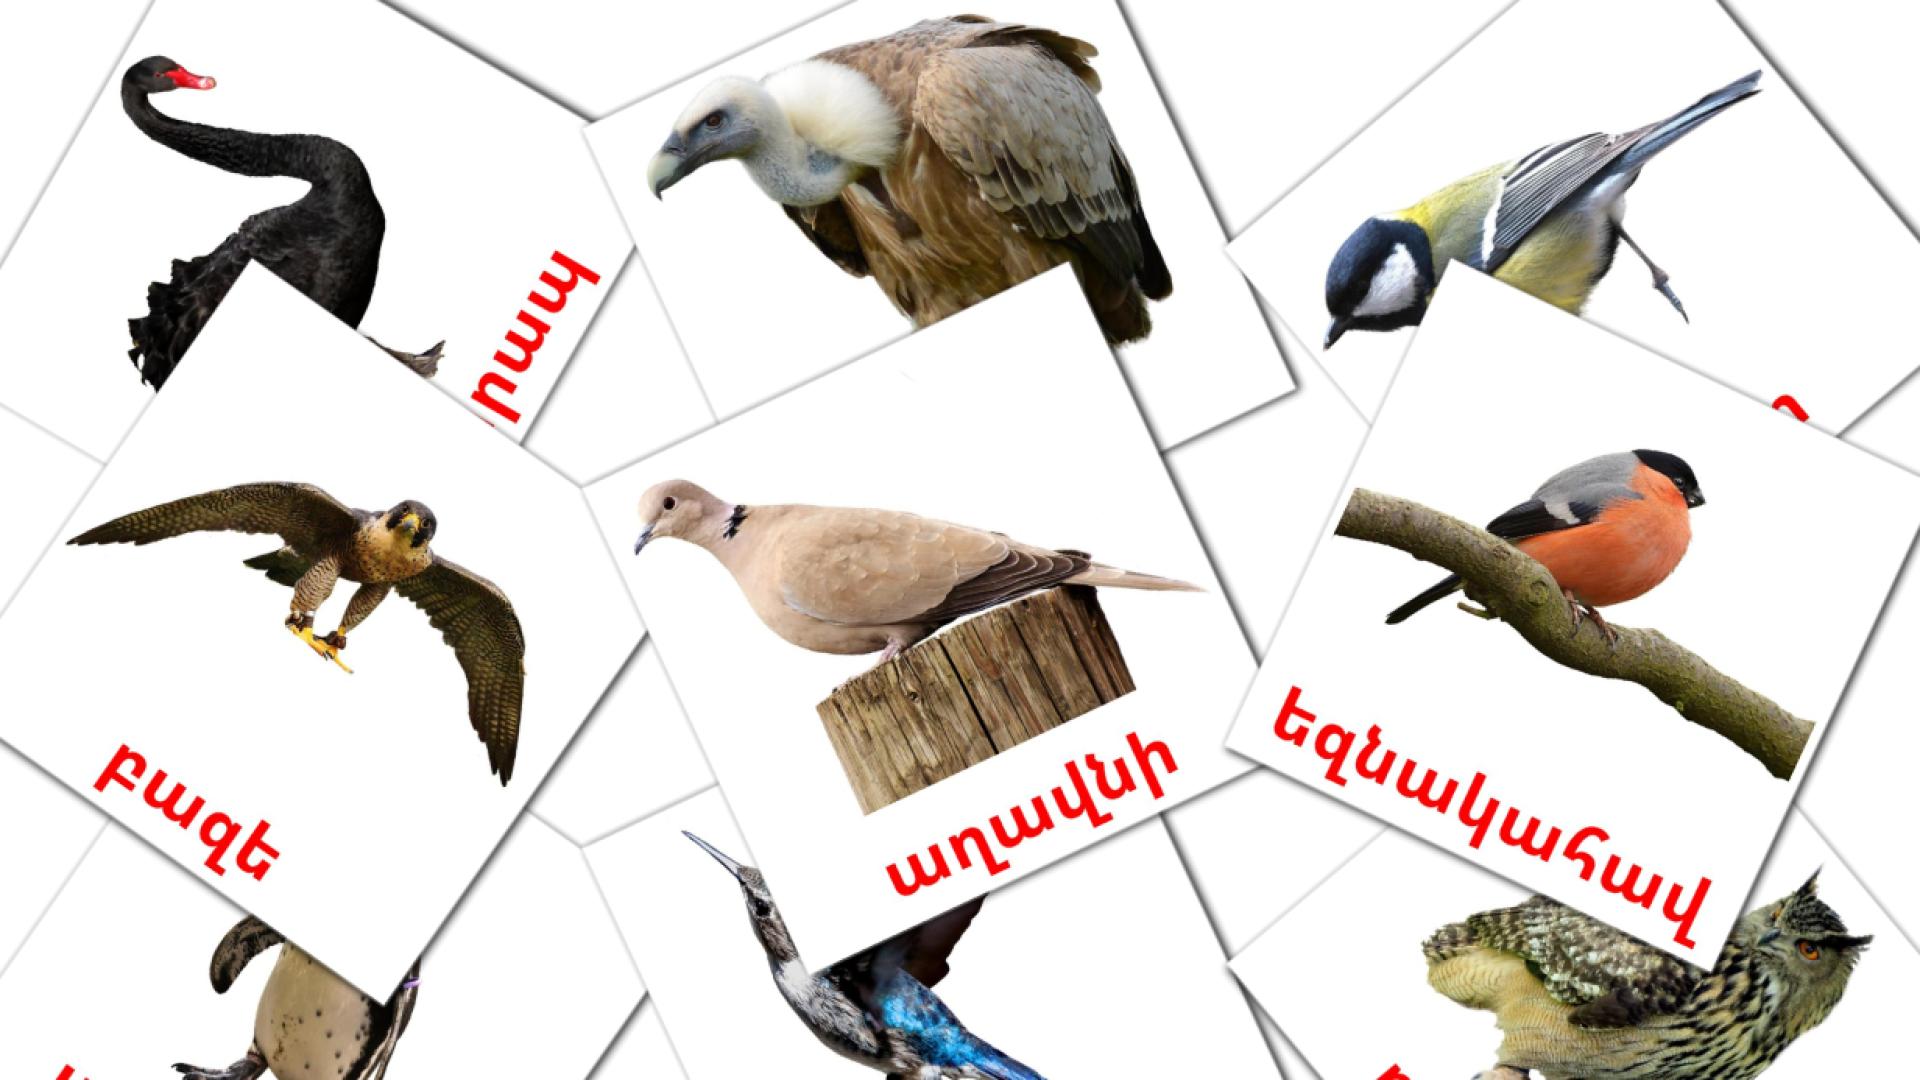 Wild birds - armenian vocabulary cards